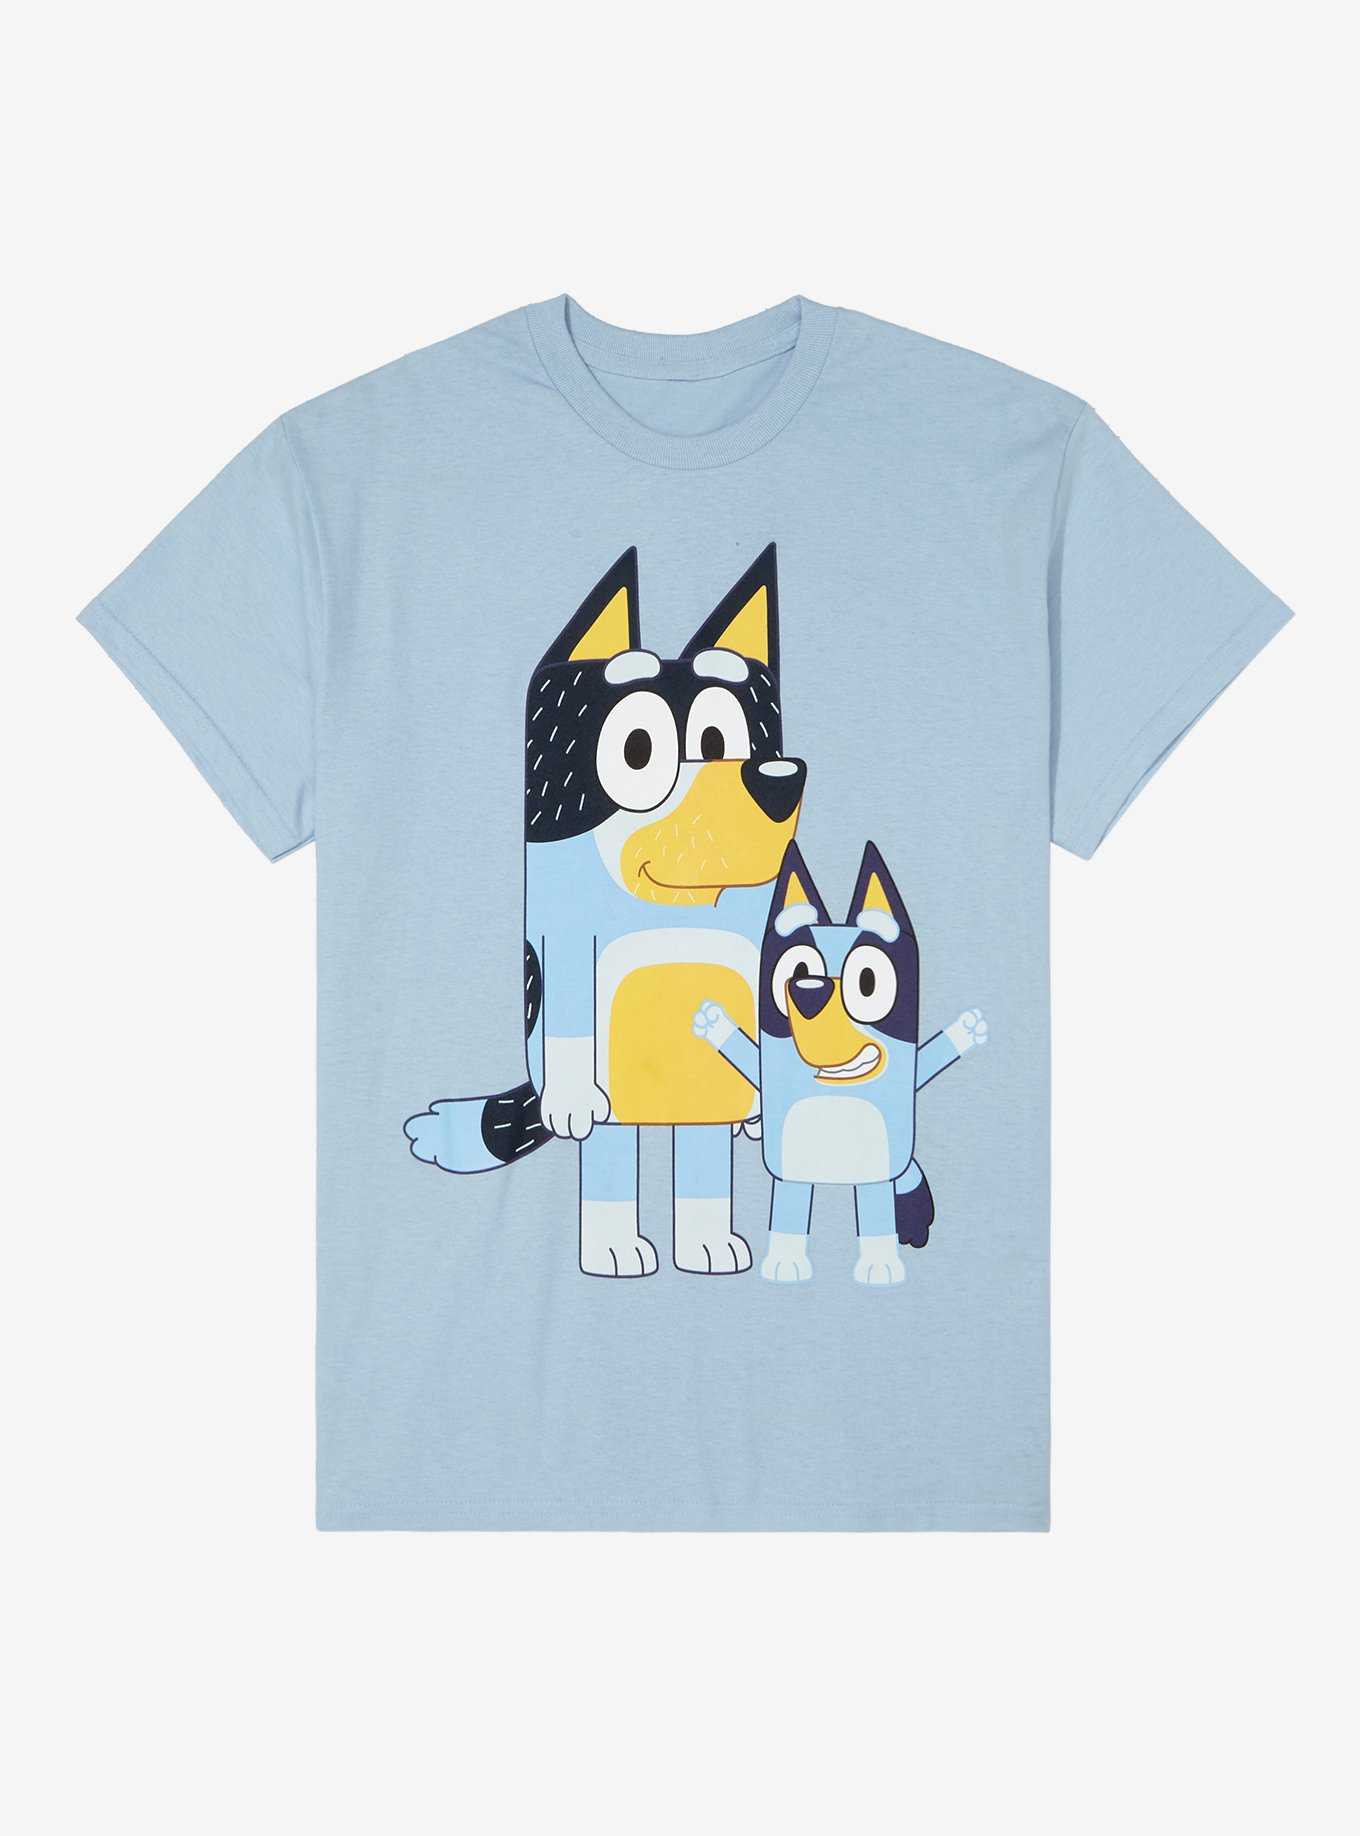 Bluey Bandit & Bluey Boyfriend Fit Girls T-Shirt, , hi-res